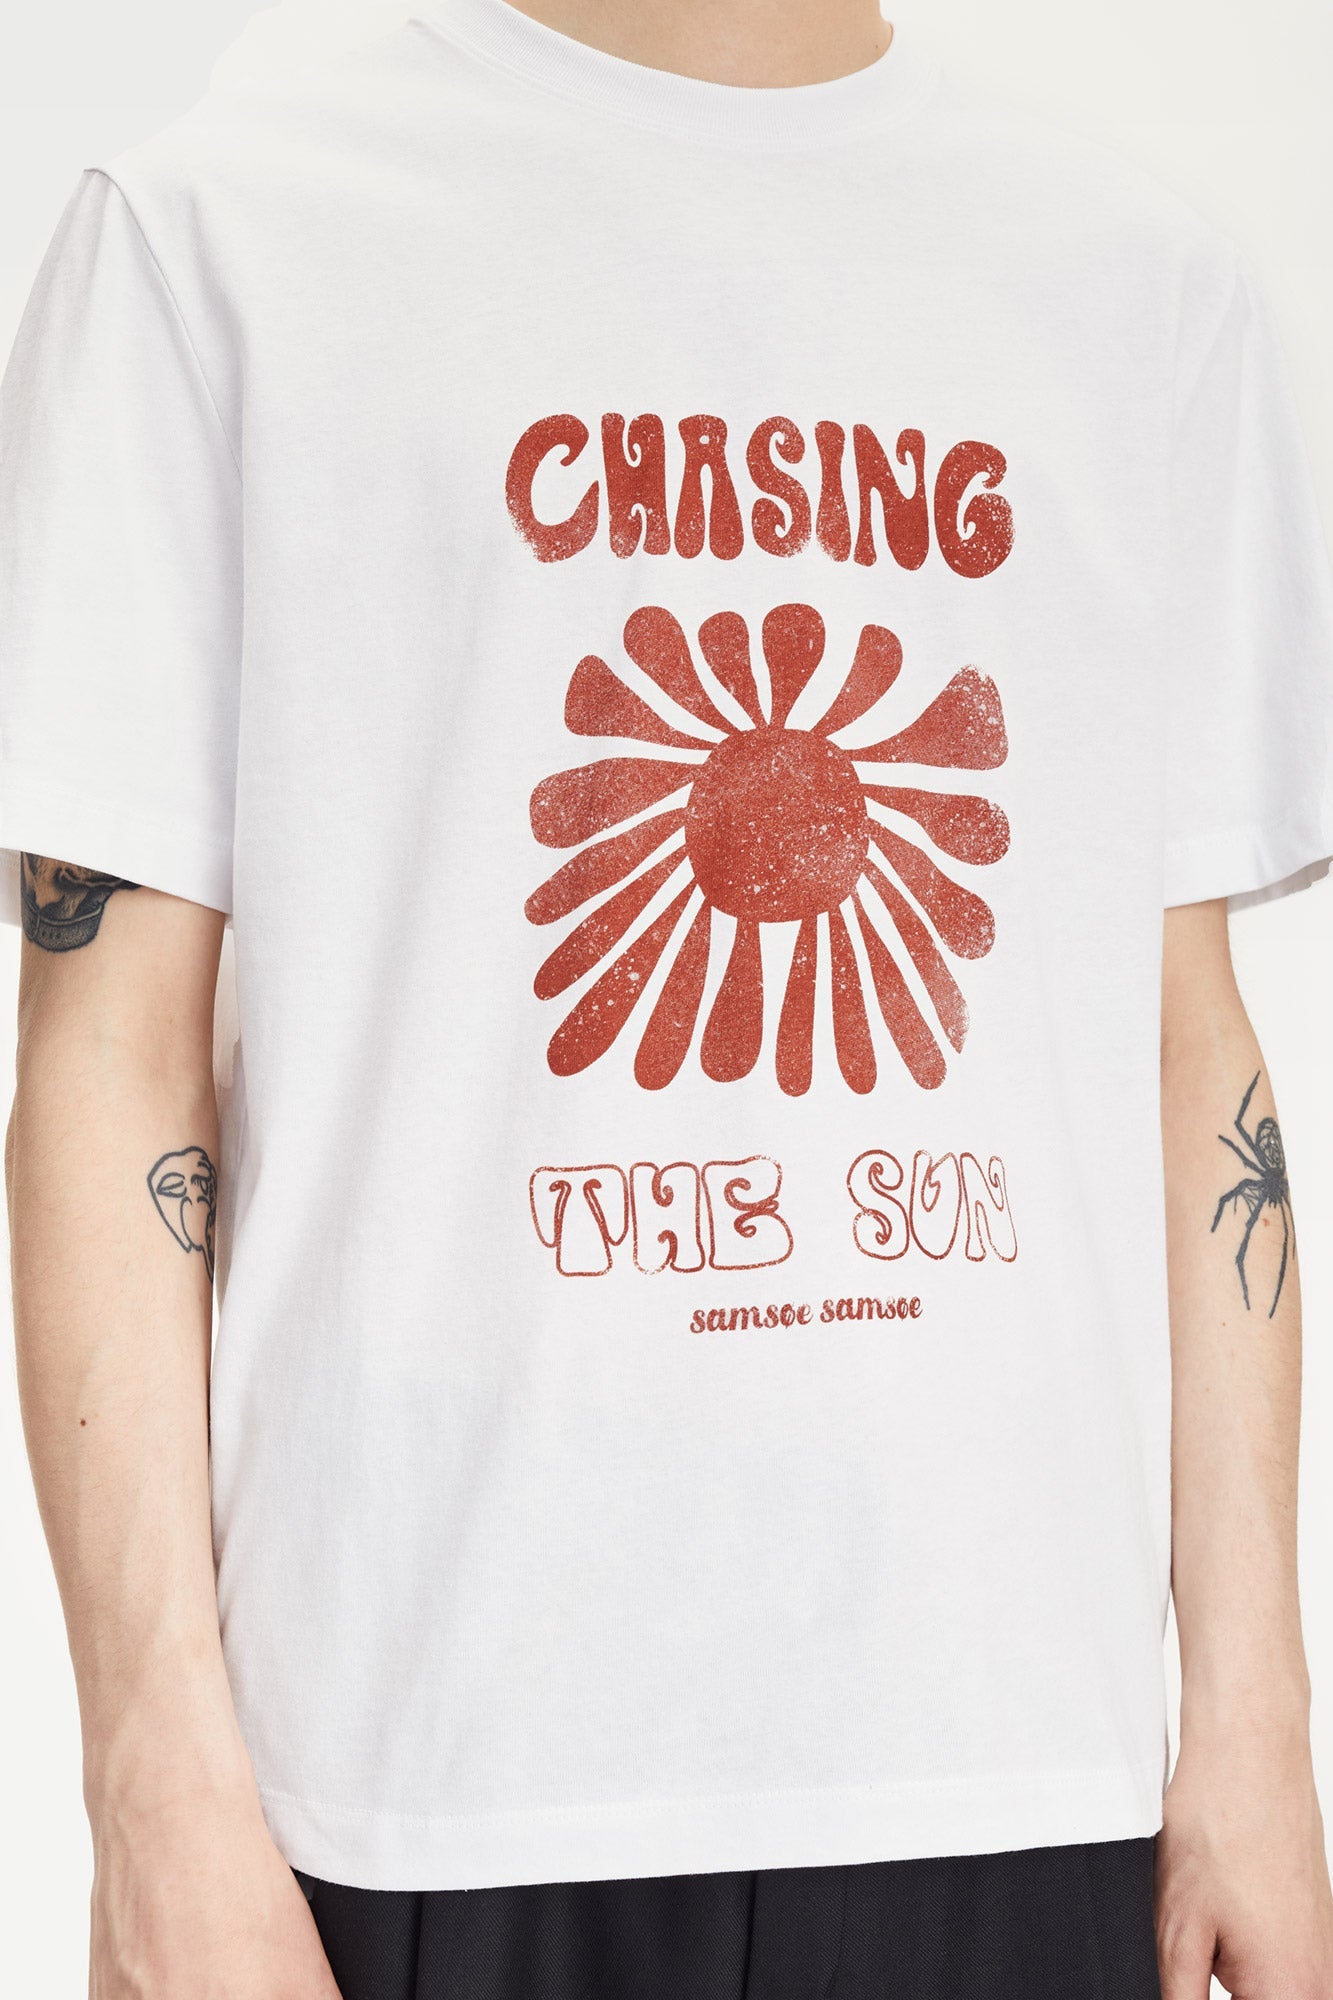 Chasing T-shirt 11415 - White